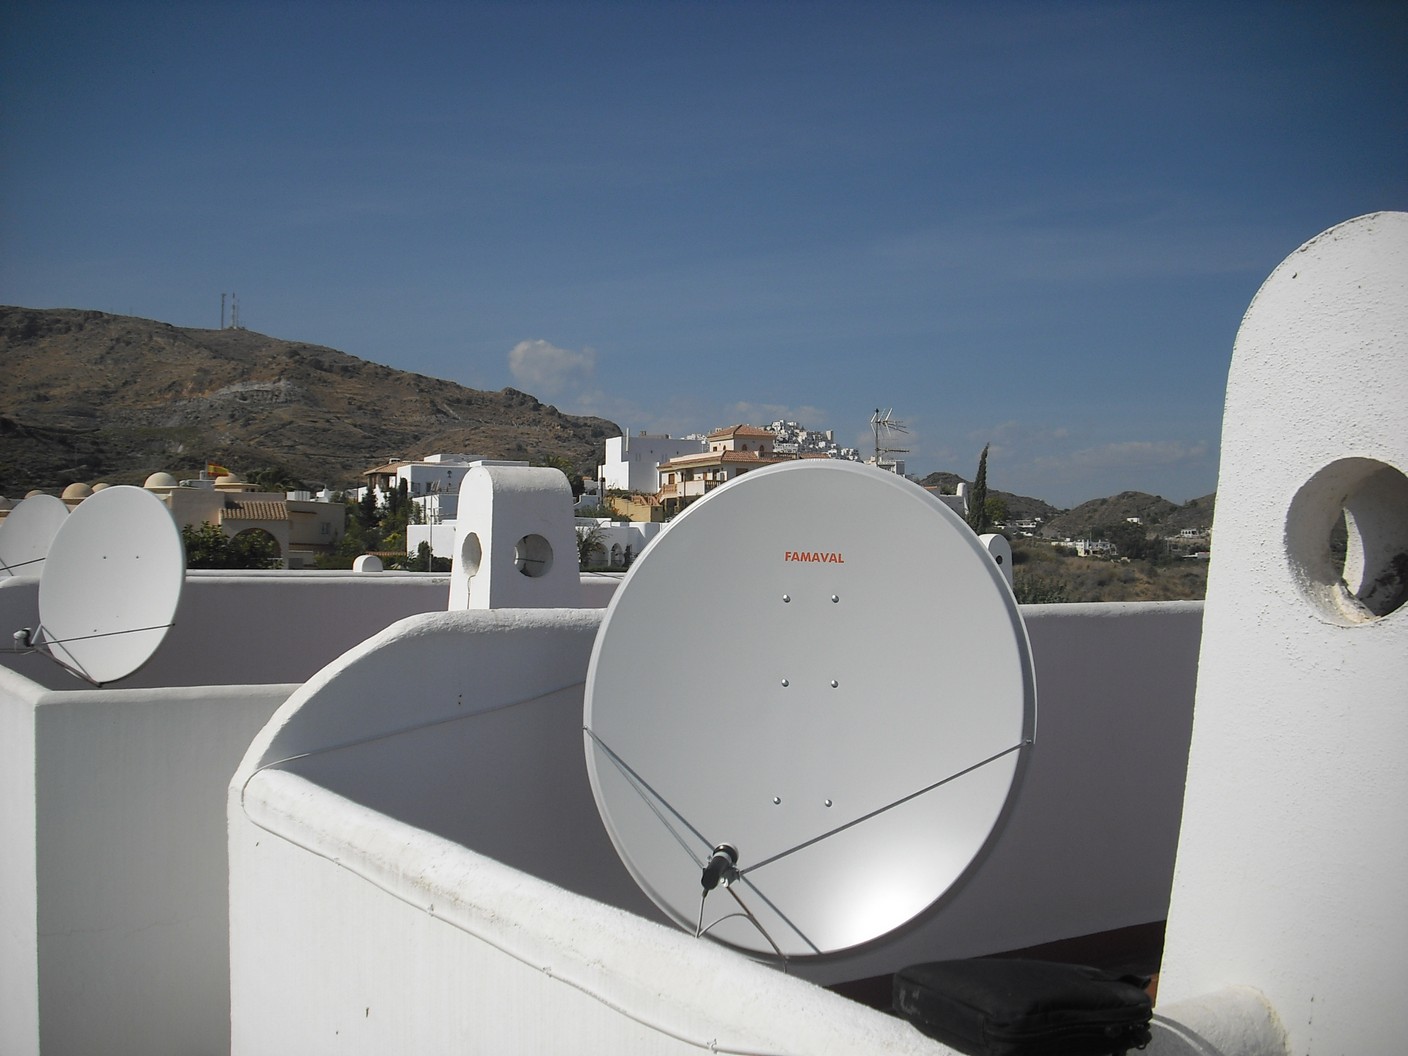 sky tv installers satellite dishes sky cards in spain costa blanca madrid marbella malaga6